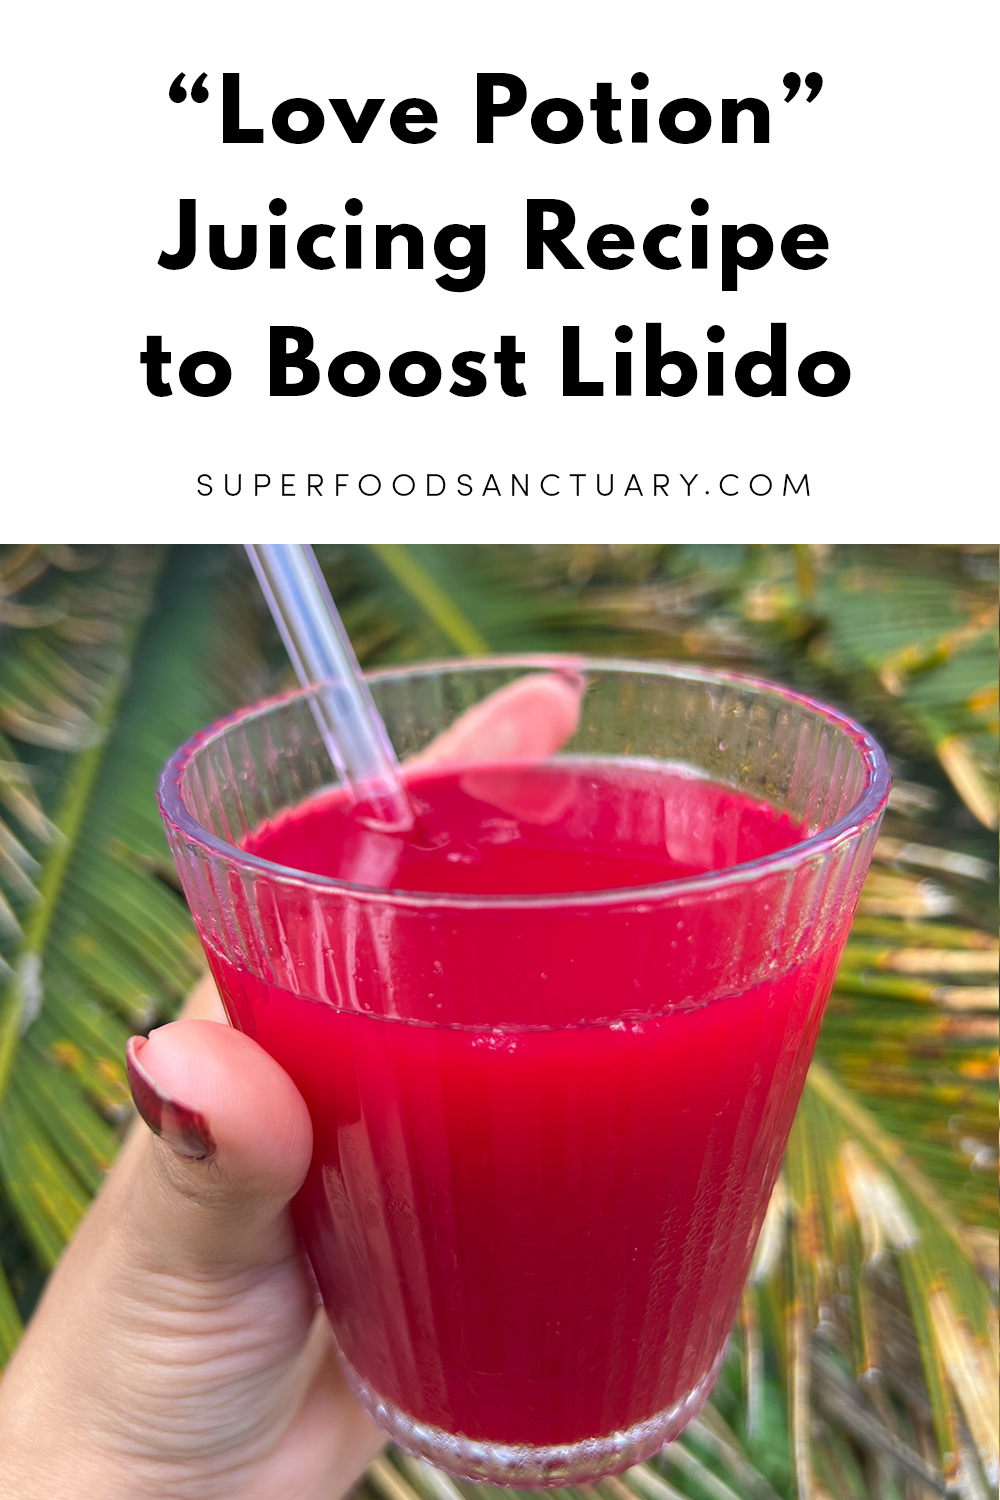 Top 4 Best Libido Juice Recipes - Superfood Sanctuary